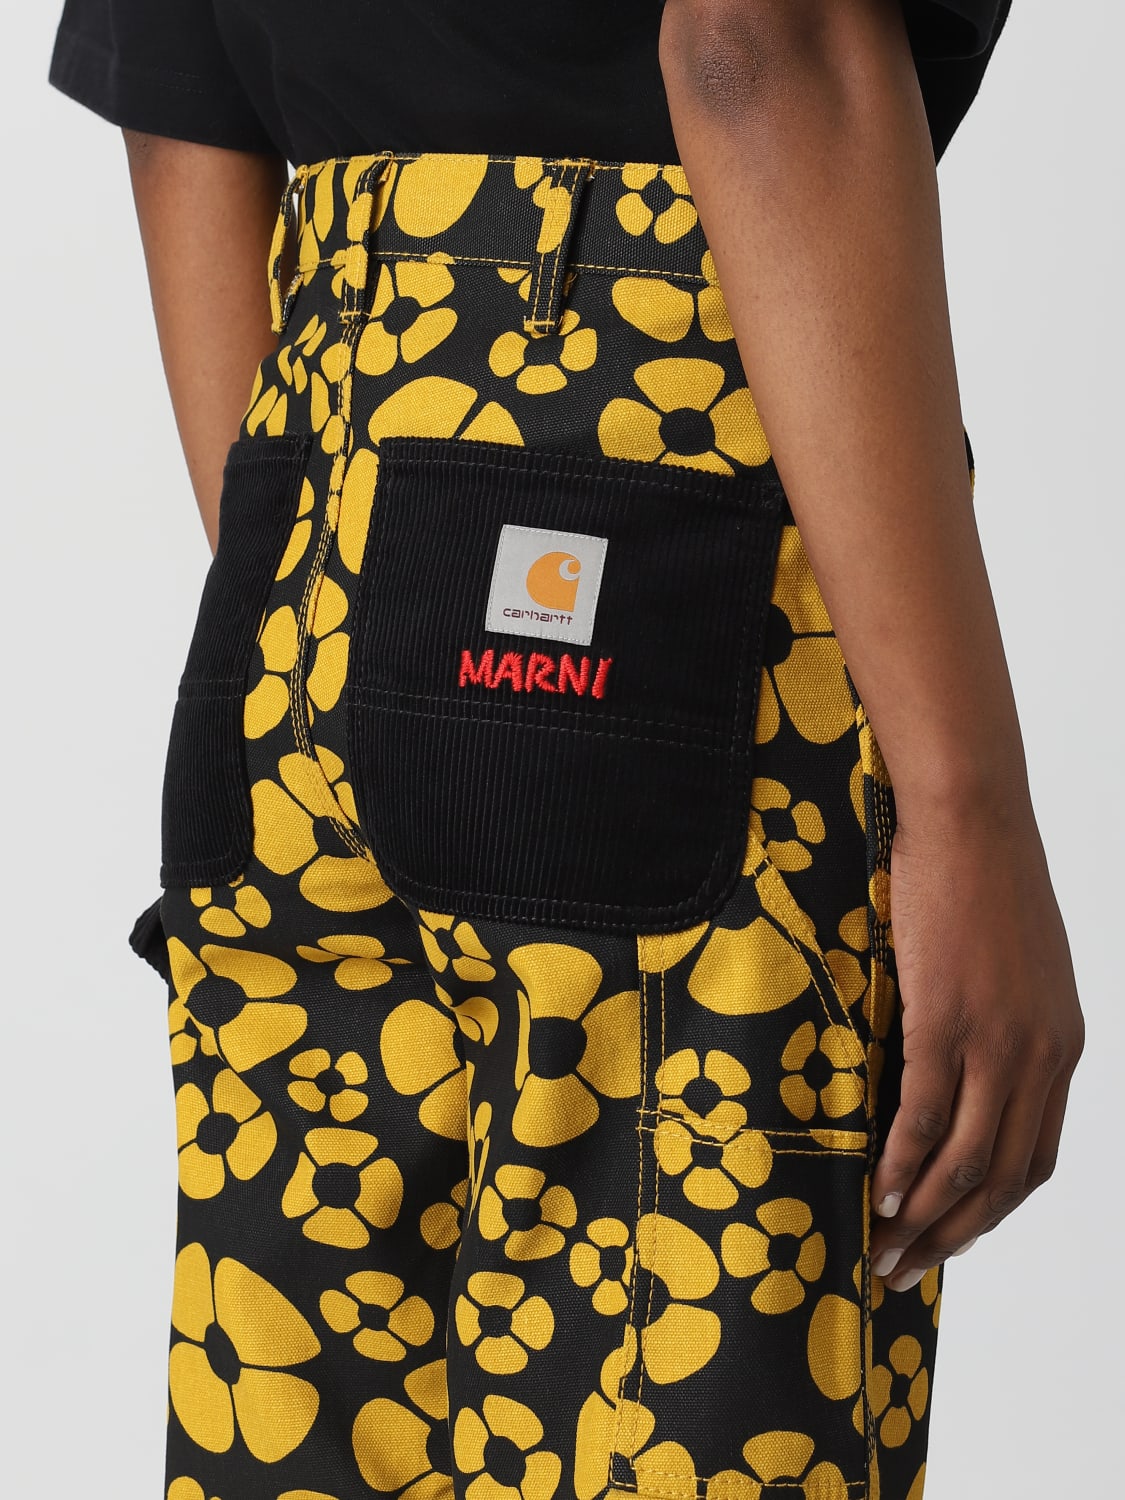 MARNI: Carhartt WIP pants in printed cotton - Yellow | Marni pants PAMA031293UTX001 online on GIGLIO.COM